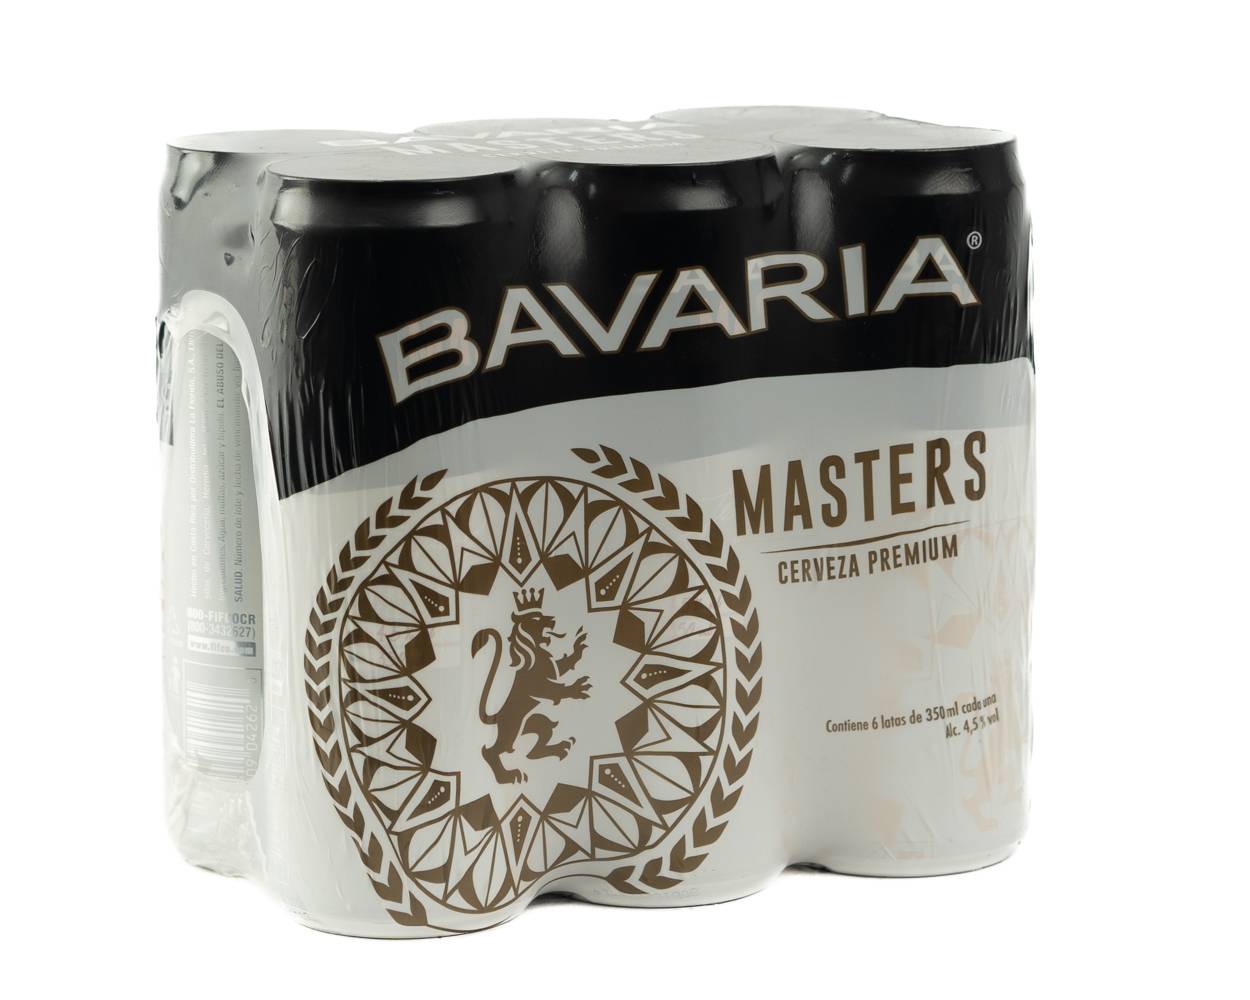 Bavaria cerveza superior lager (6 pack, 350 ml)